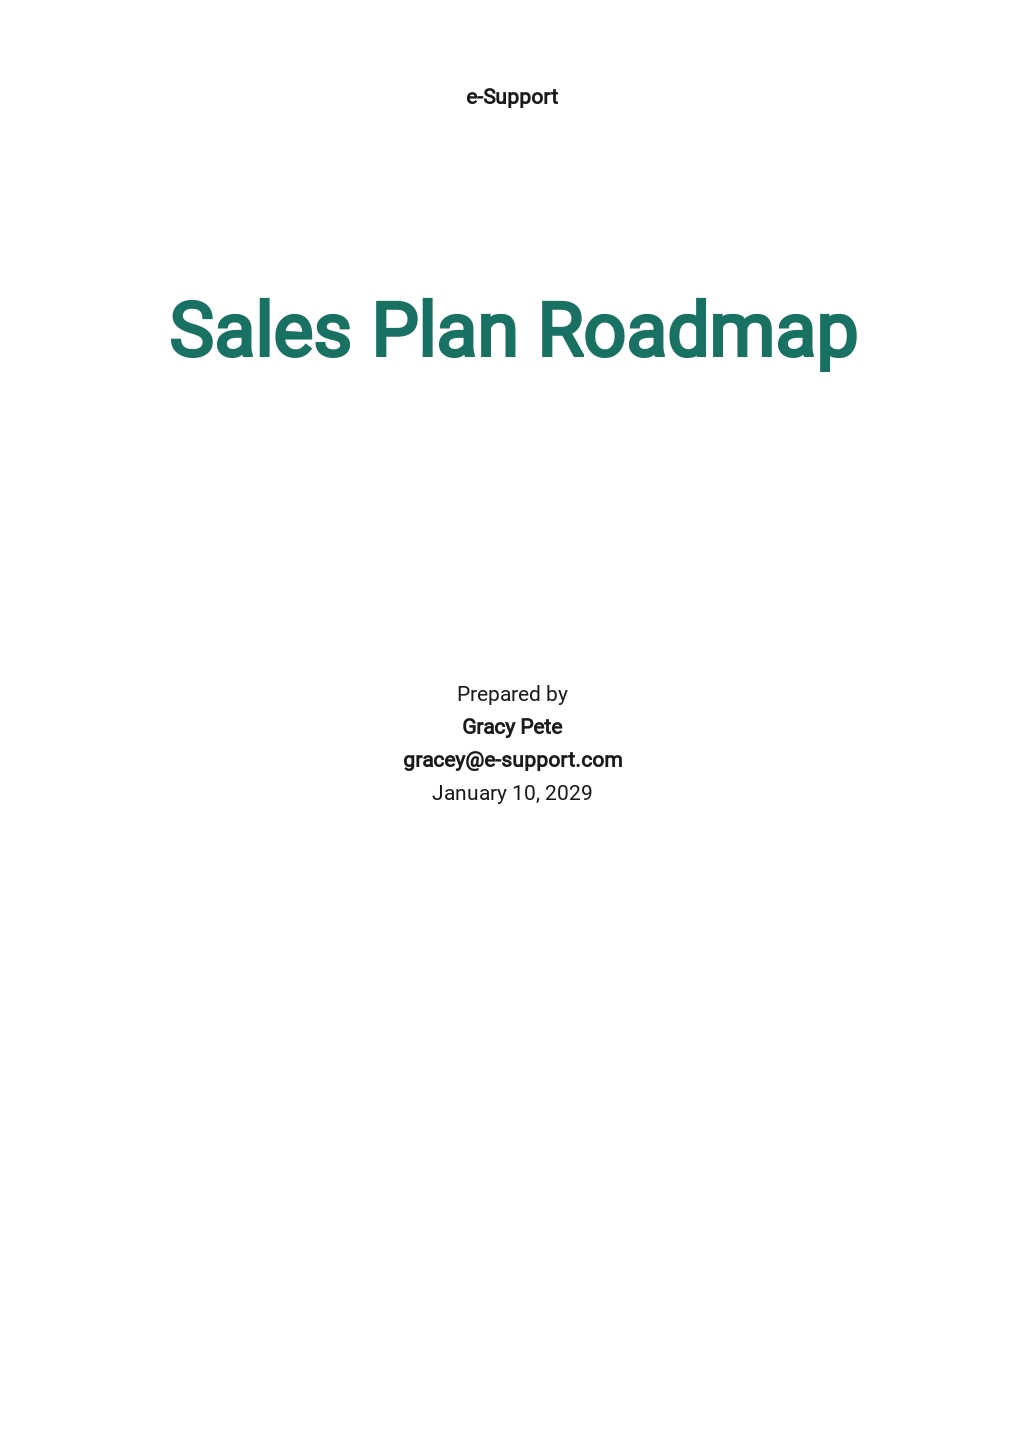 Sales Plan Roadmap Template.jpe